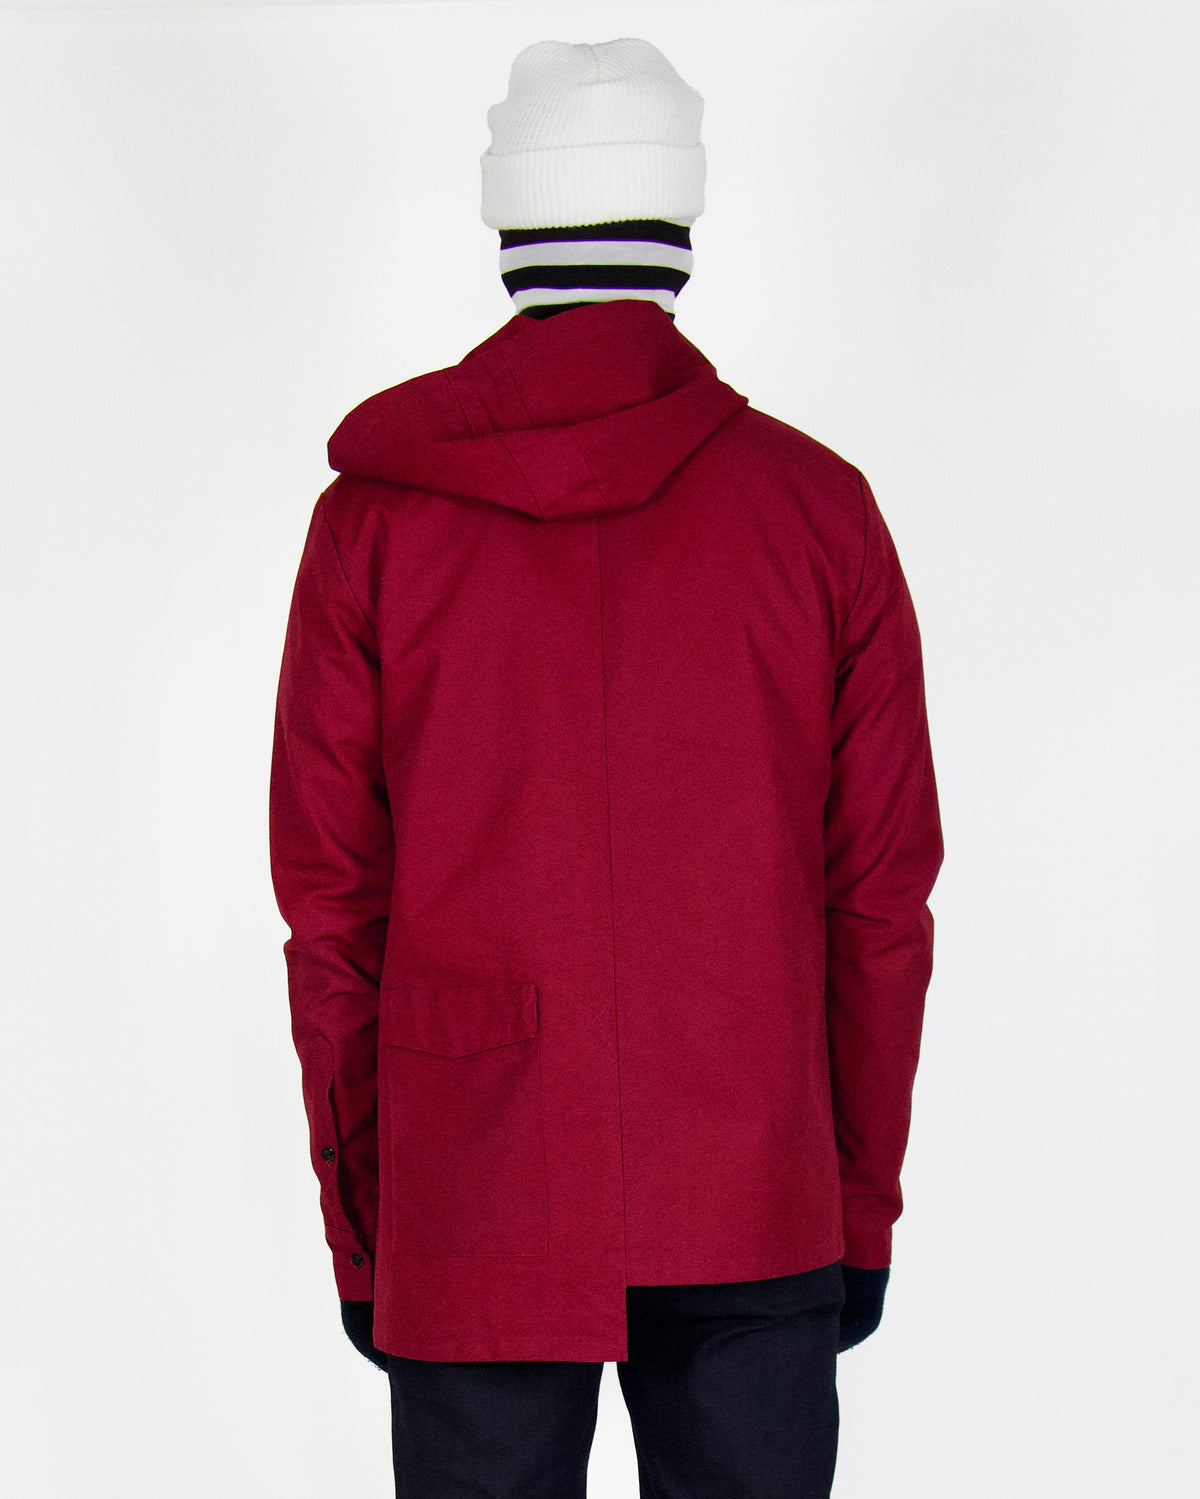 Chelsea Coat - Red